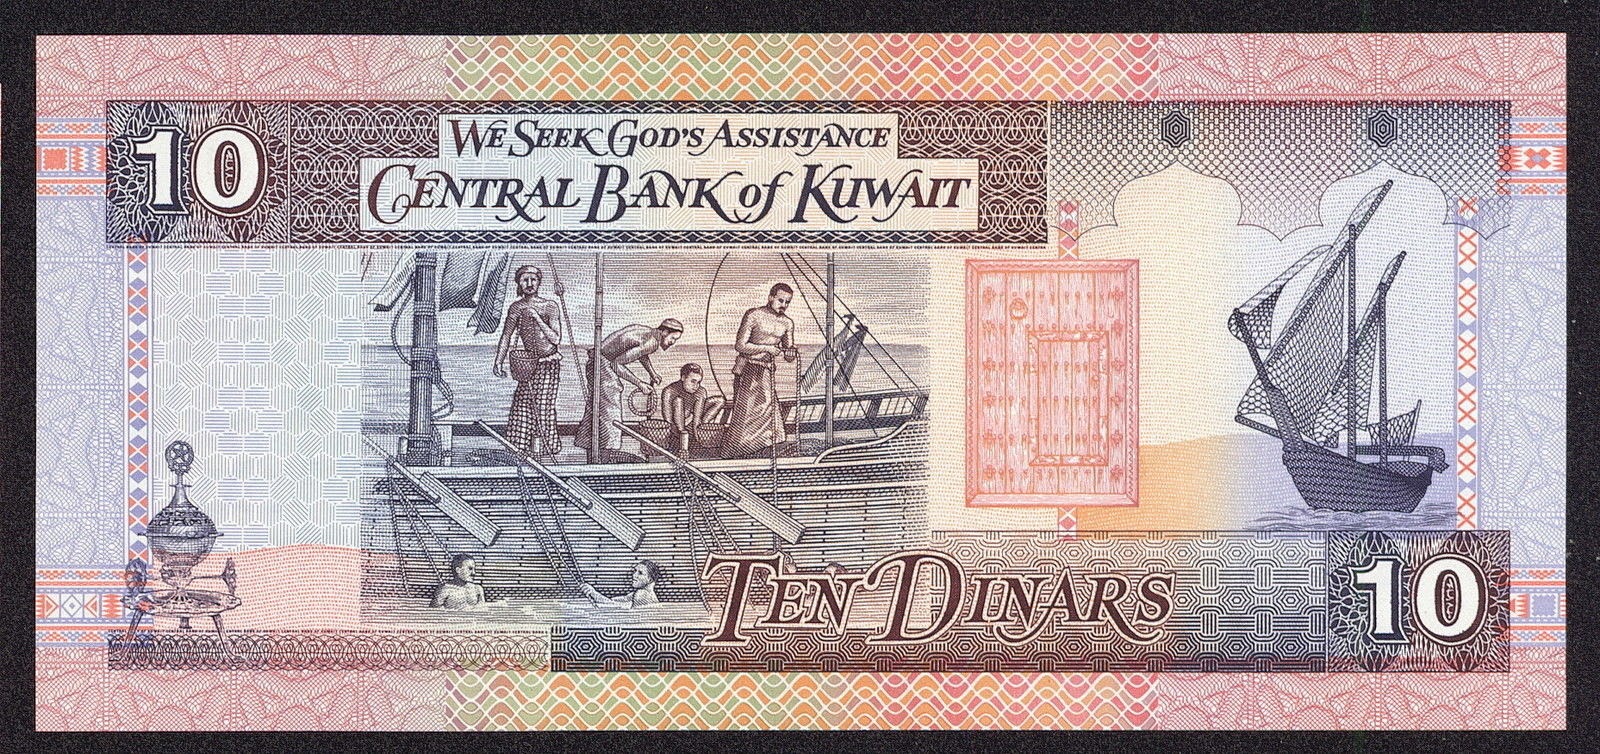 Kuwait Currency 10 Kuwaiti Dinar banknote 1994